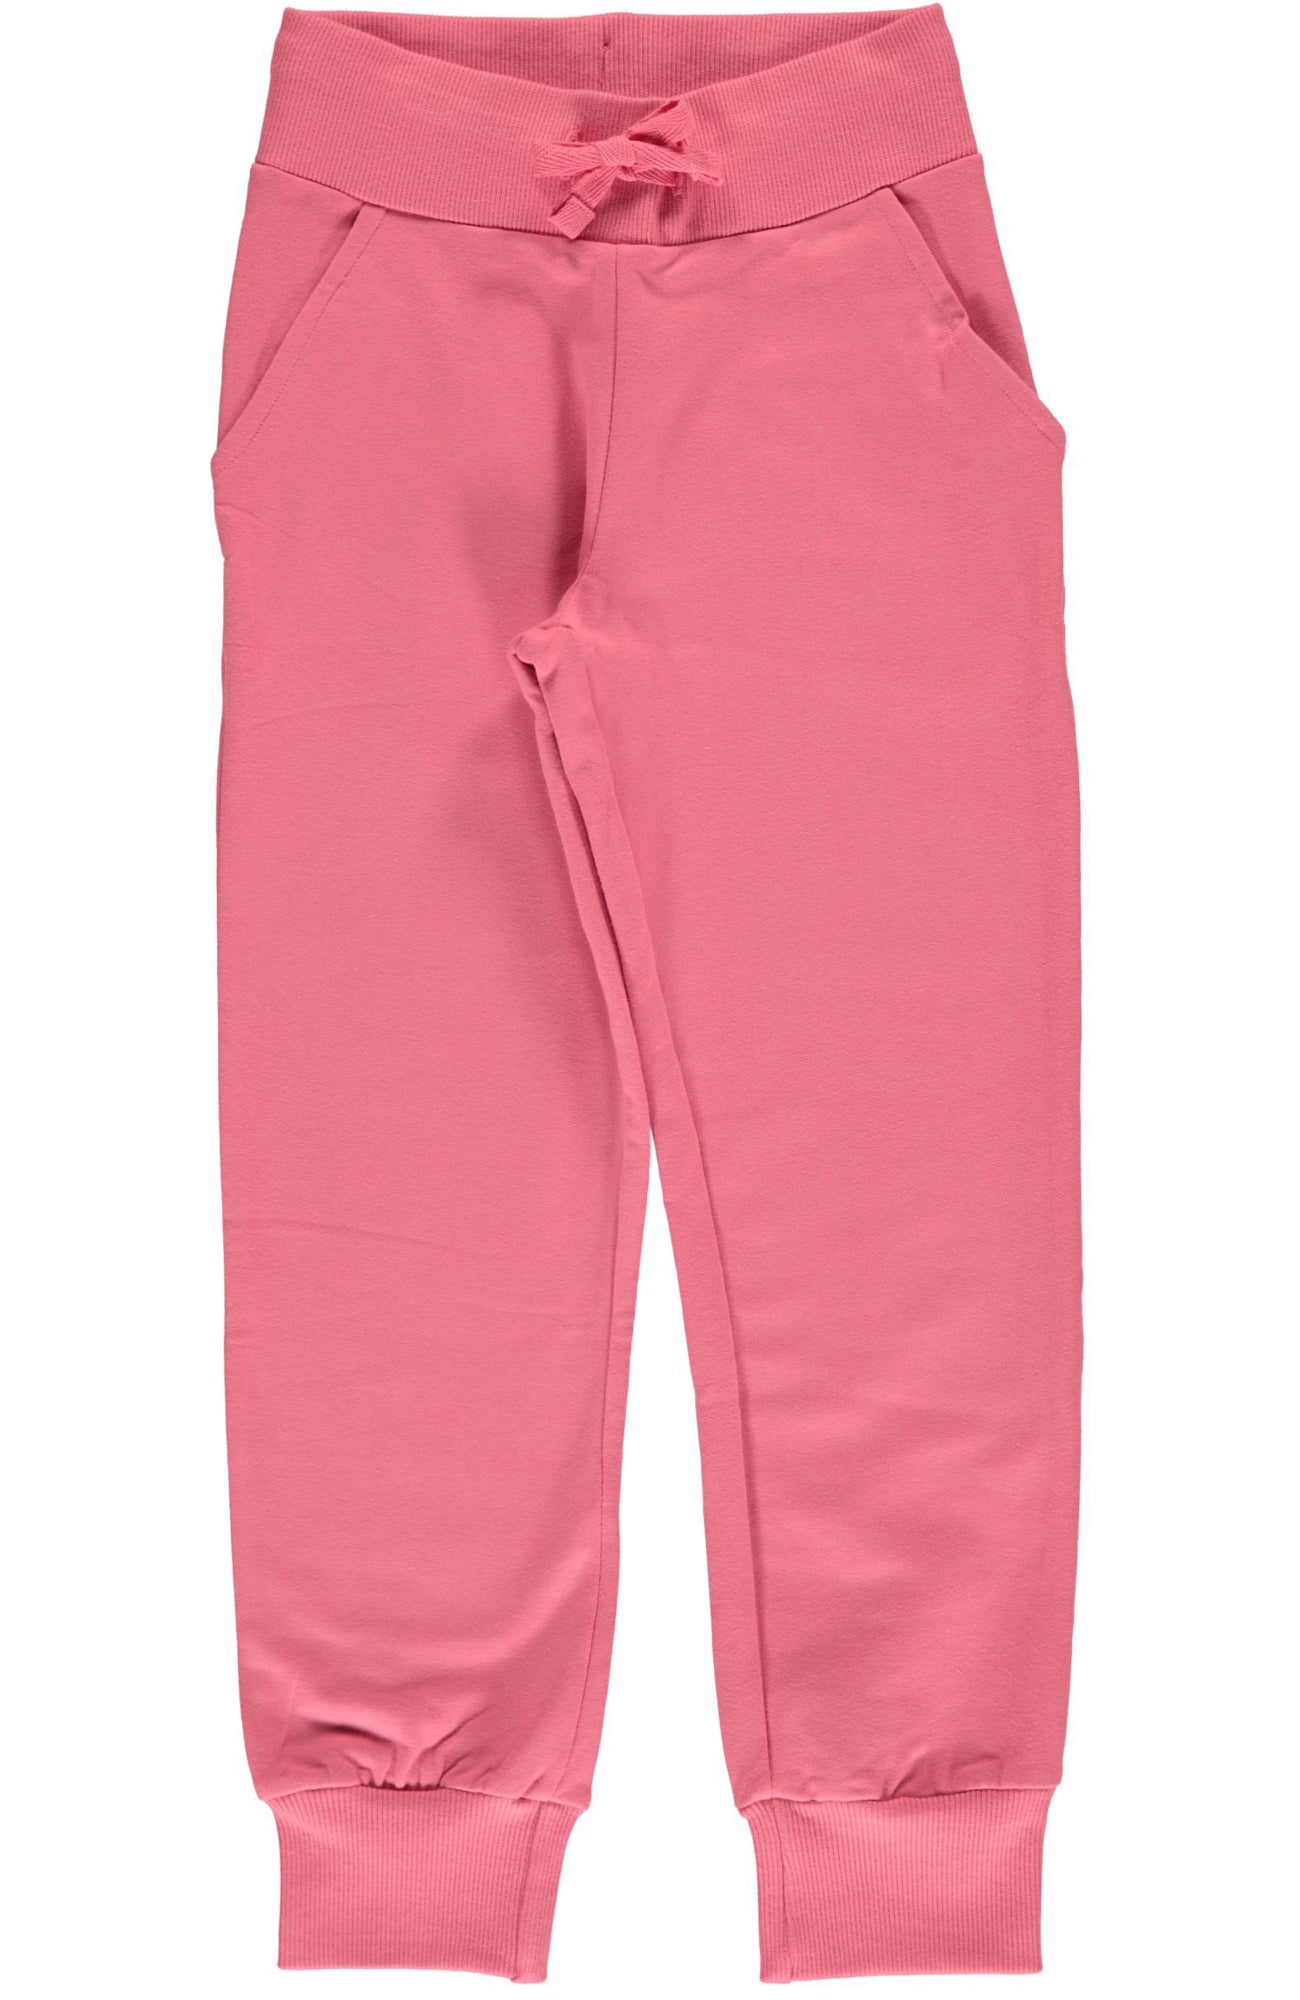 Children's Rose Pink Sweatpants - Maxomorra